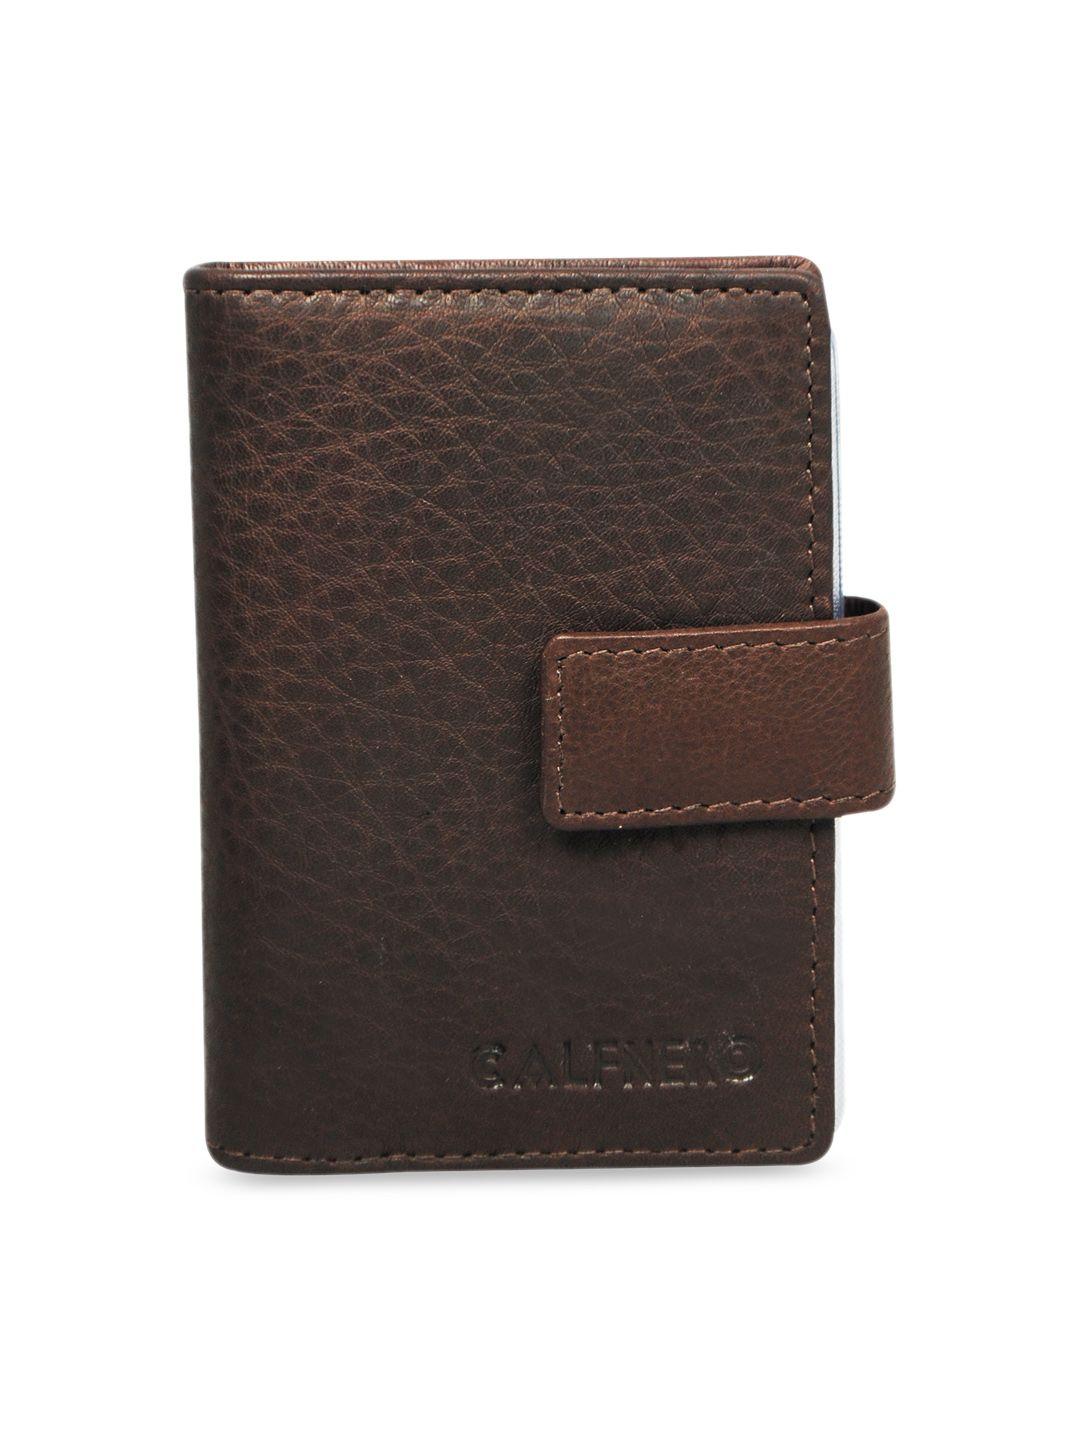 calfnero unisex brown textured leather card holder